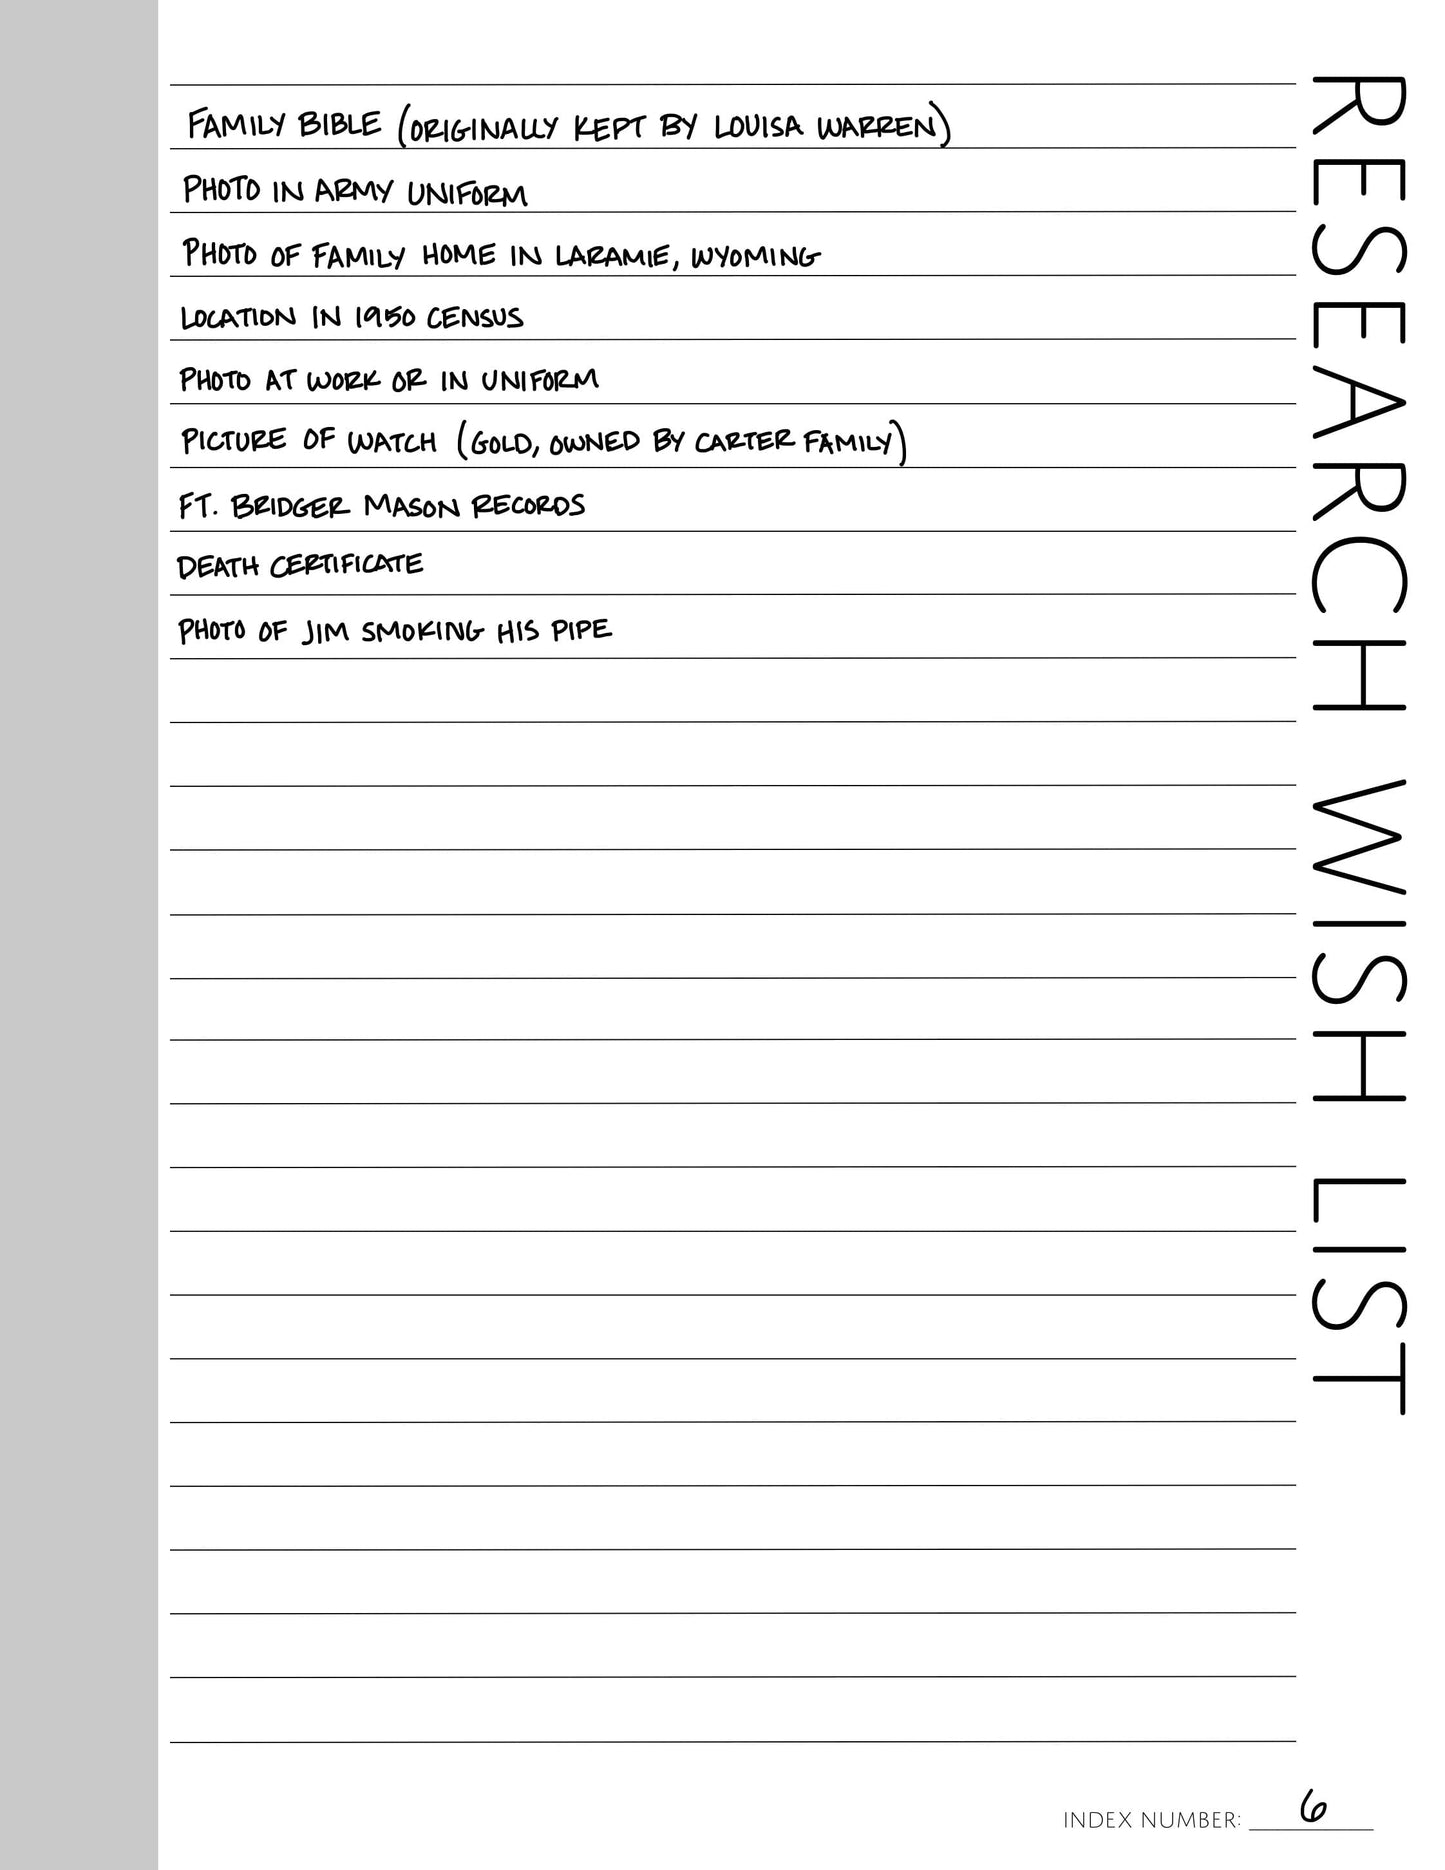 Research Wish List: Printable Genealogy Form (Digital Download)